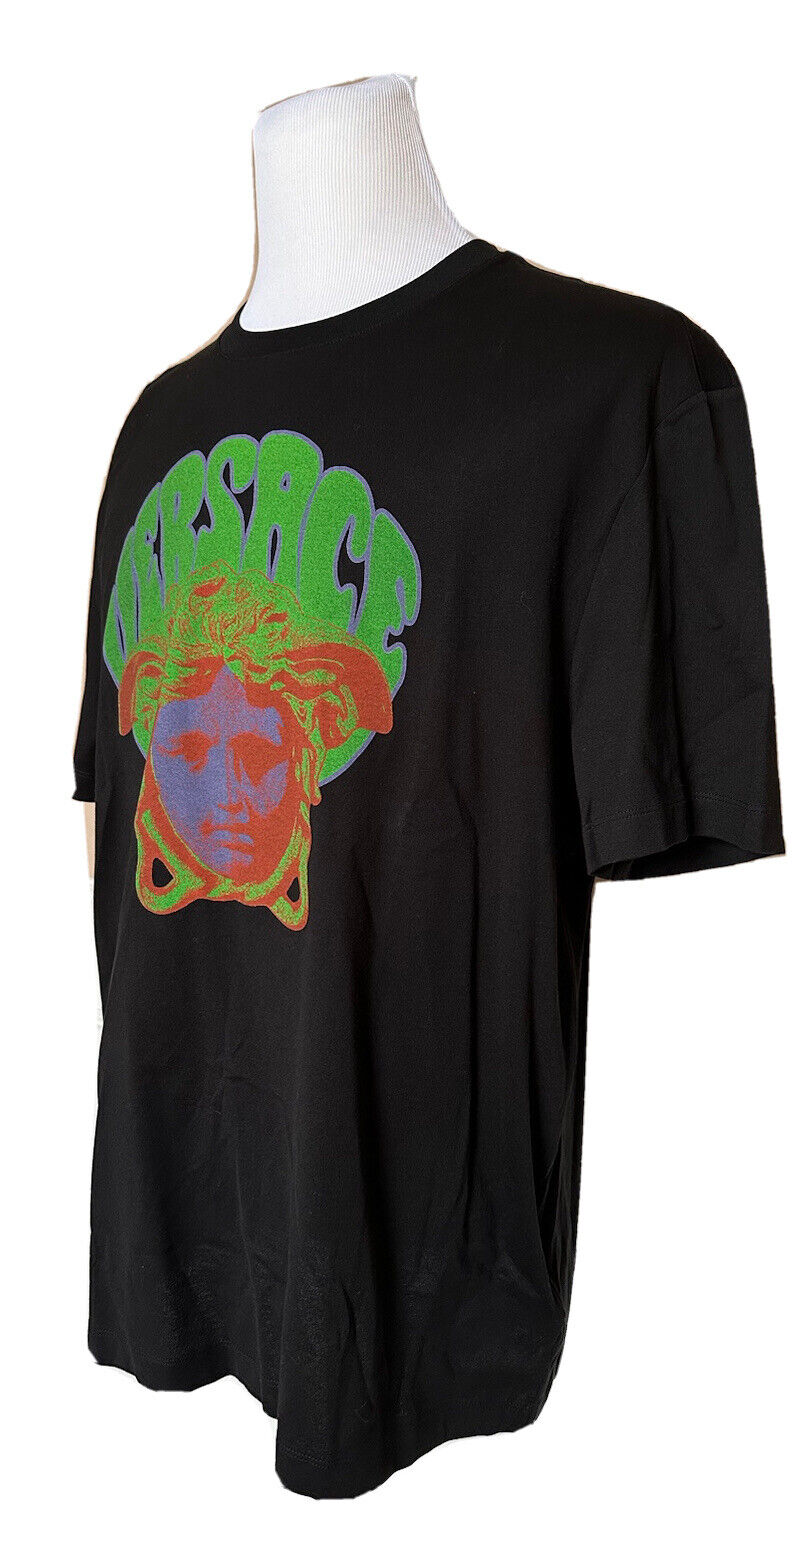 NWT 450 $ Versace Medusa bedrucktes schwarzes Mitchel Fit Jersey-T-Shirt L 1003916